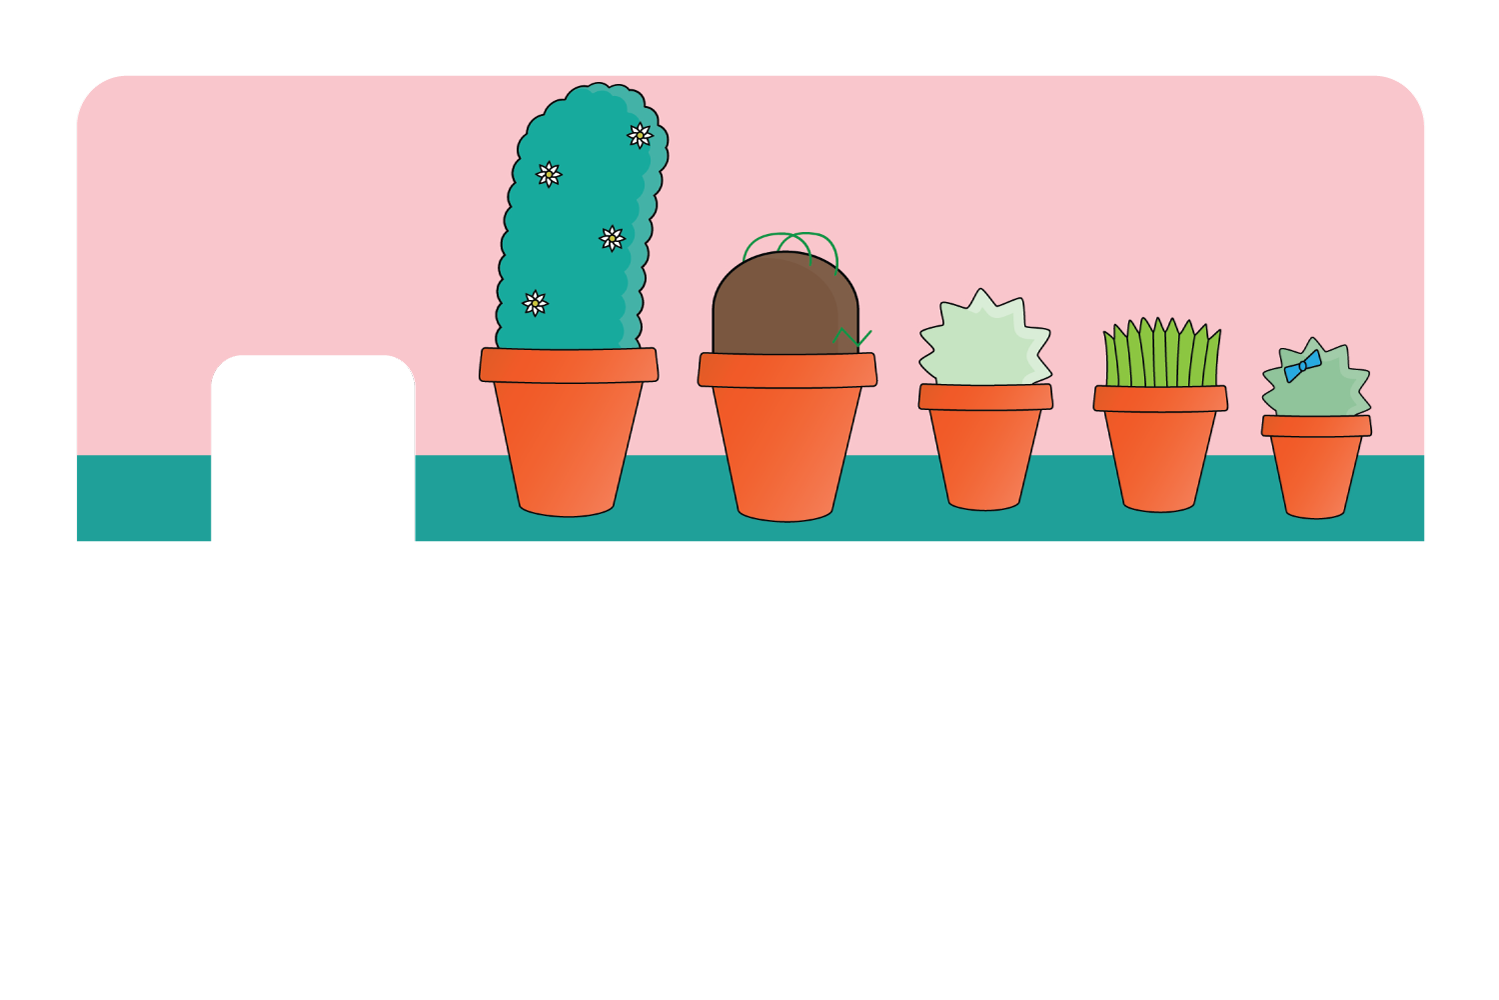 Pots & Plants